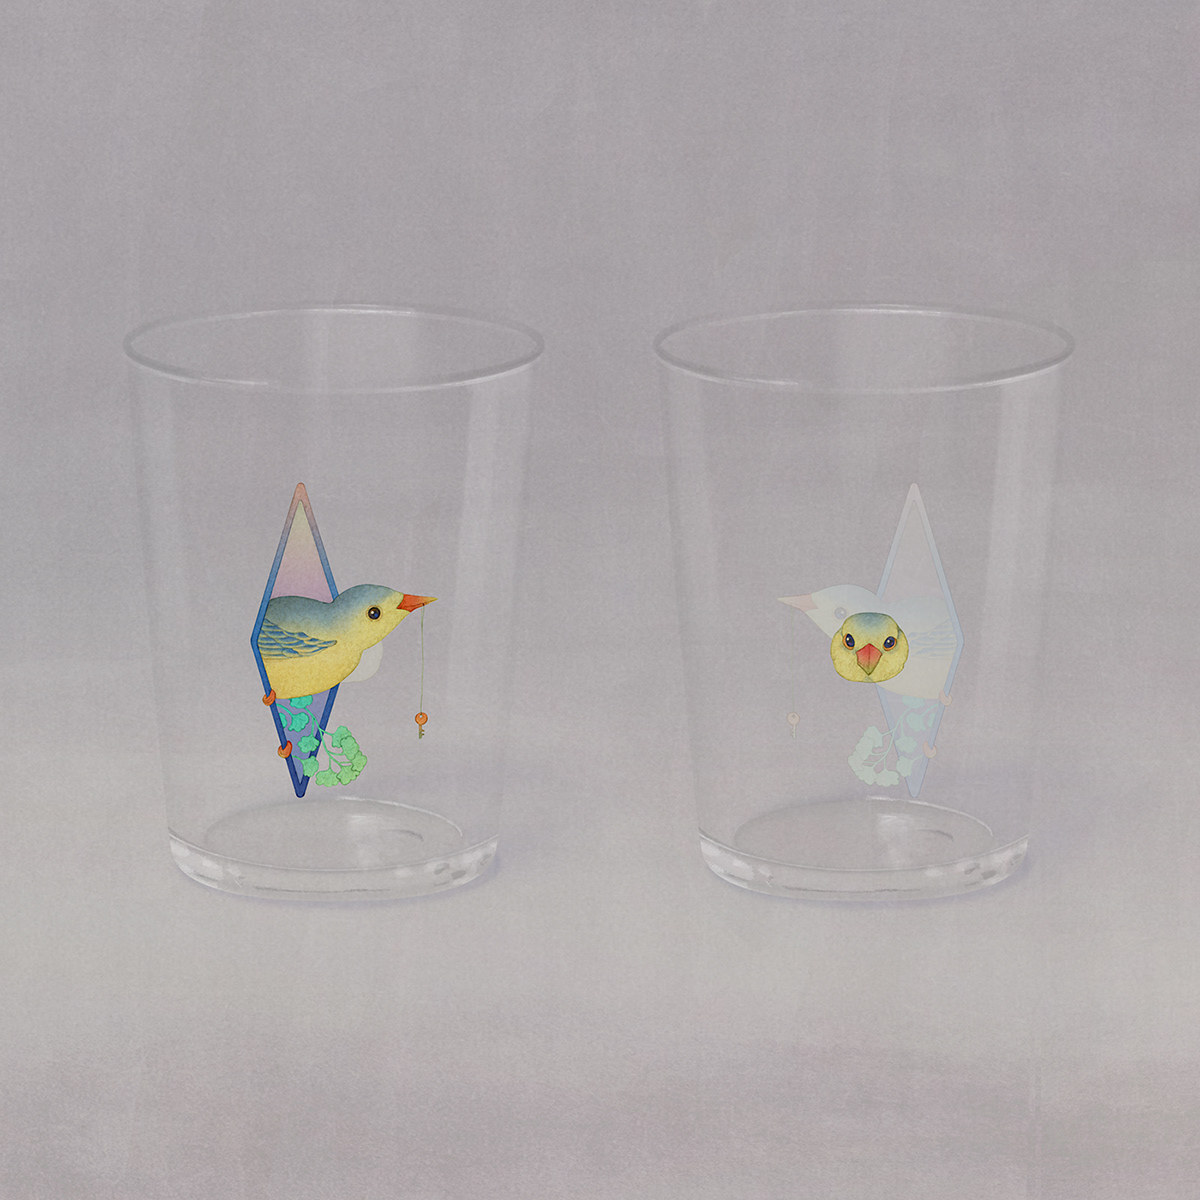 Delicately Illustrated Glassware By Whooli Chen And Di Chun Chen (14)